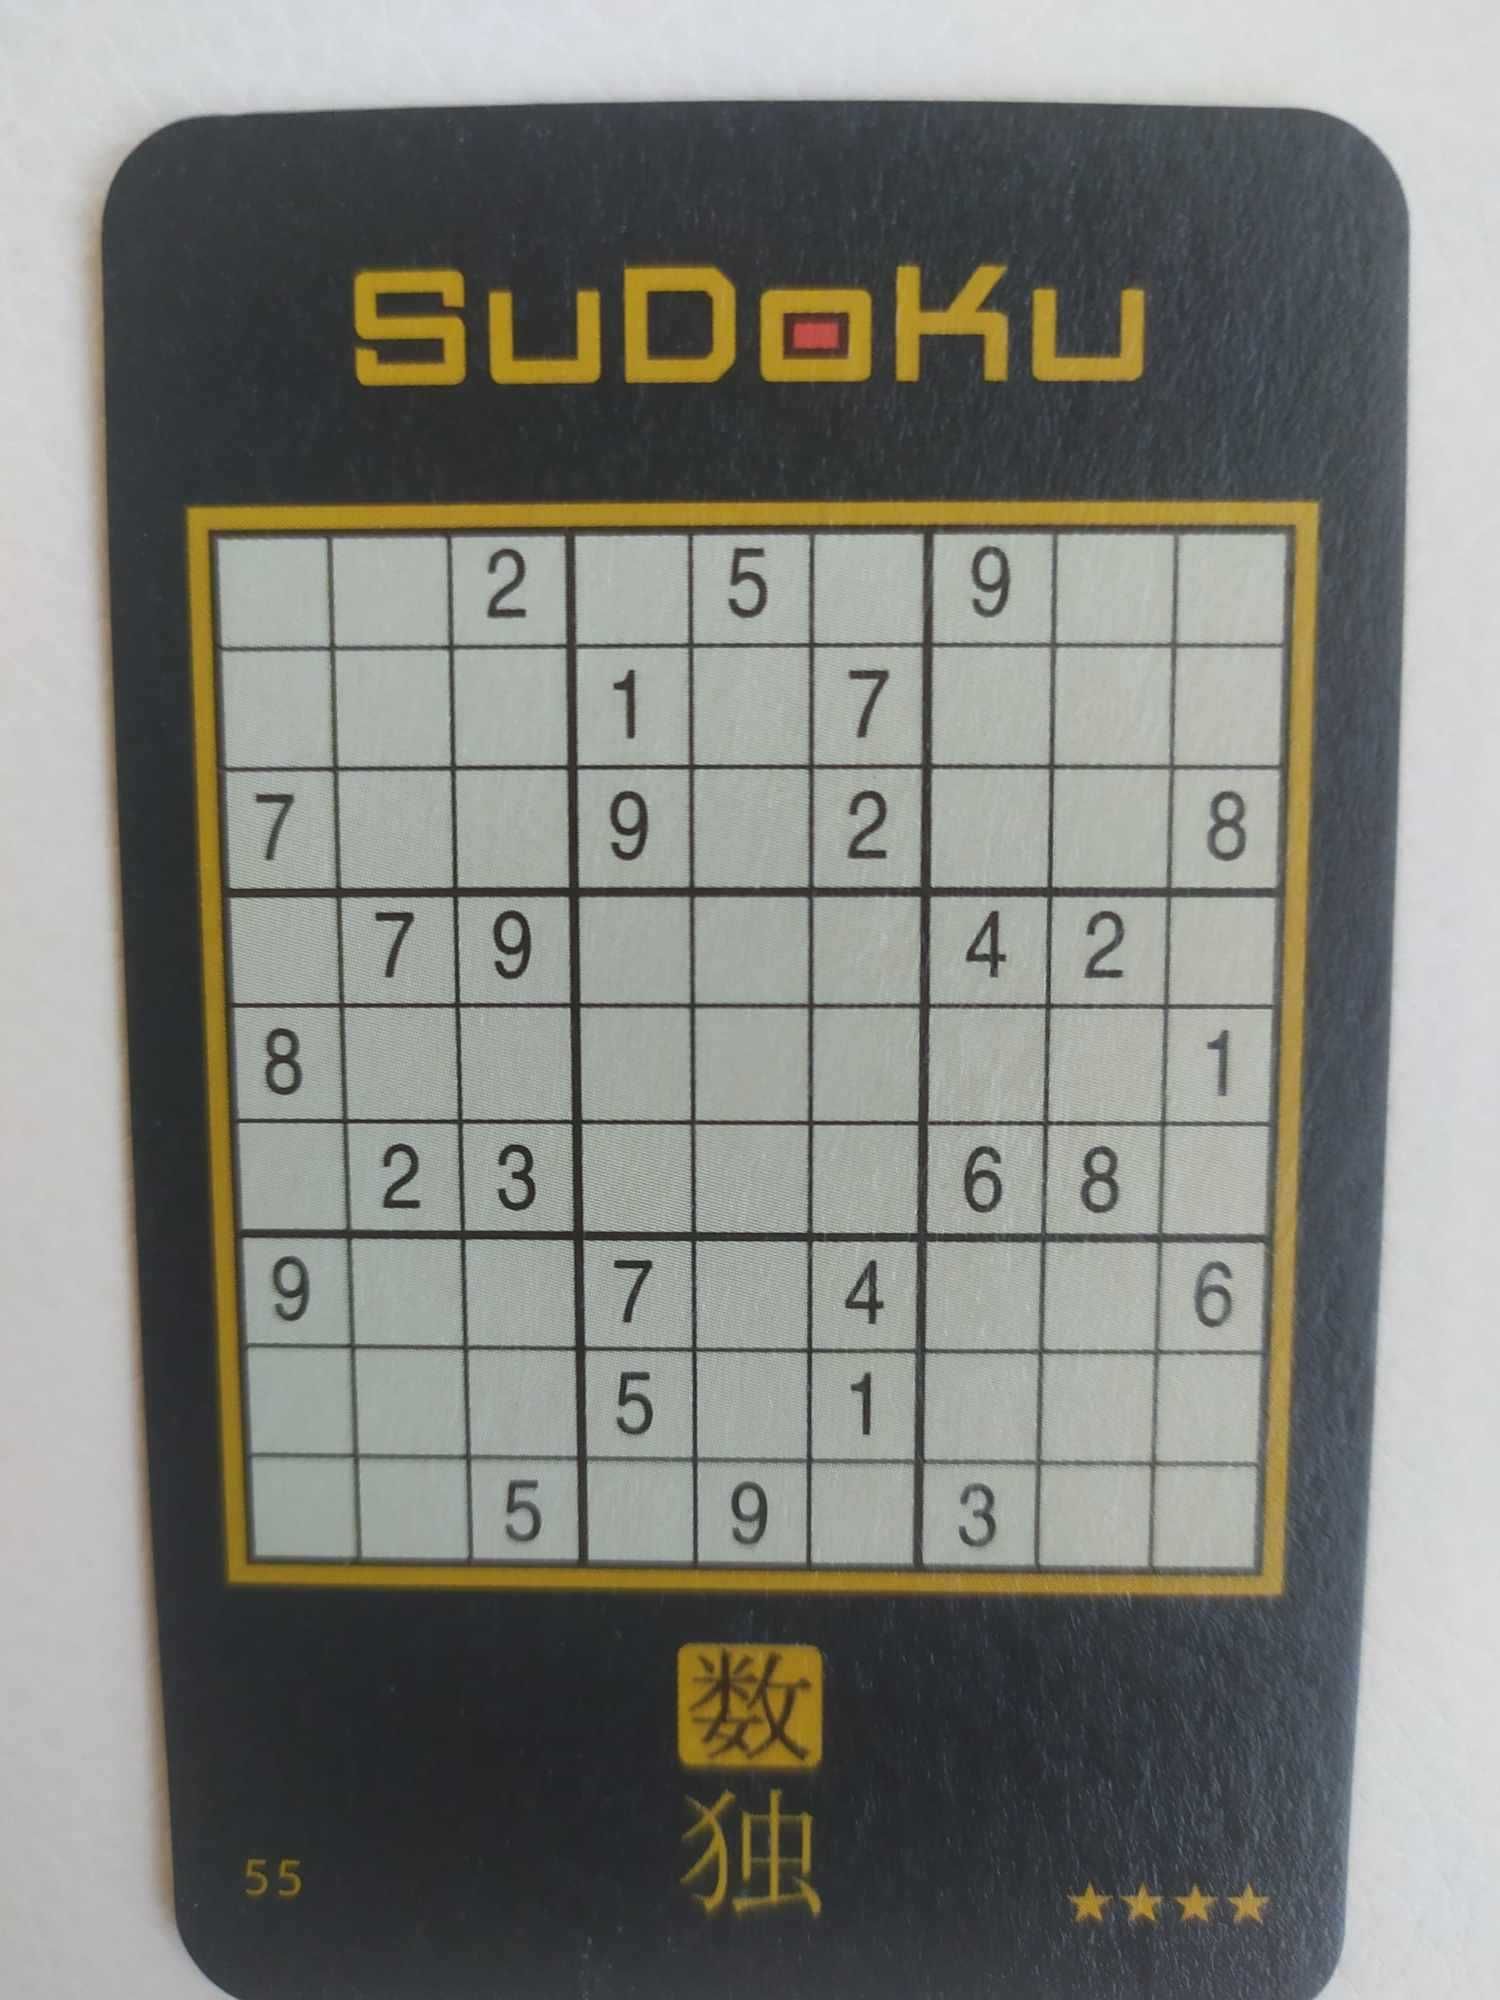 sudoku na kartach do gry